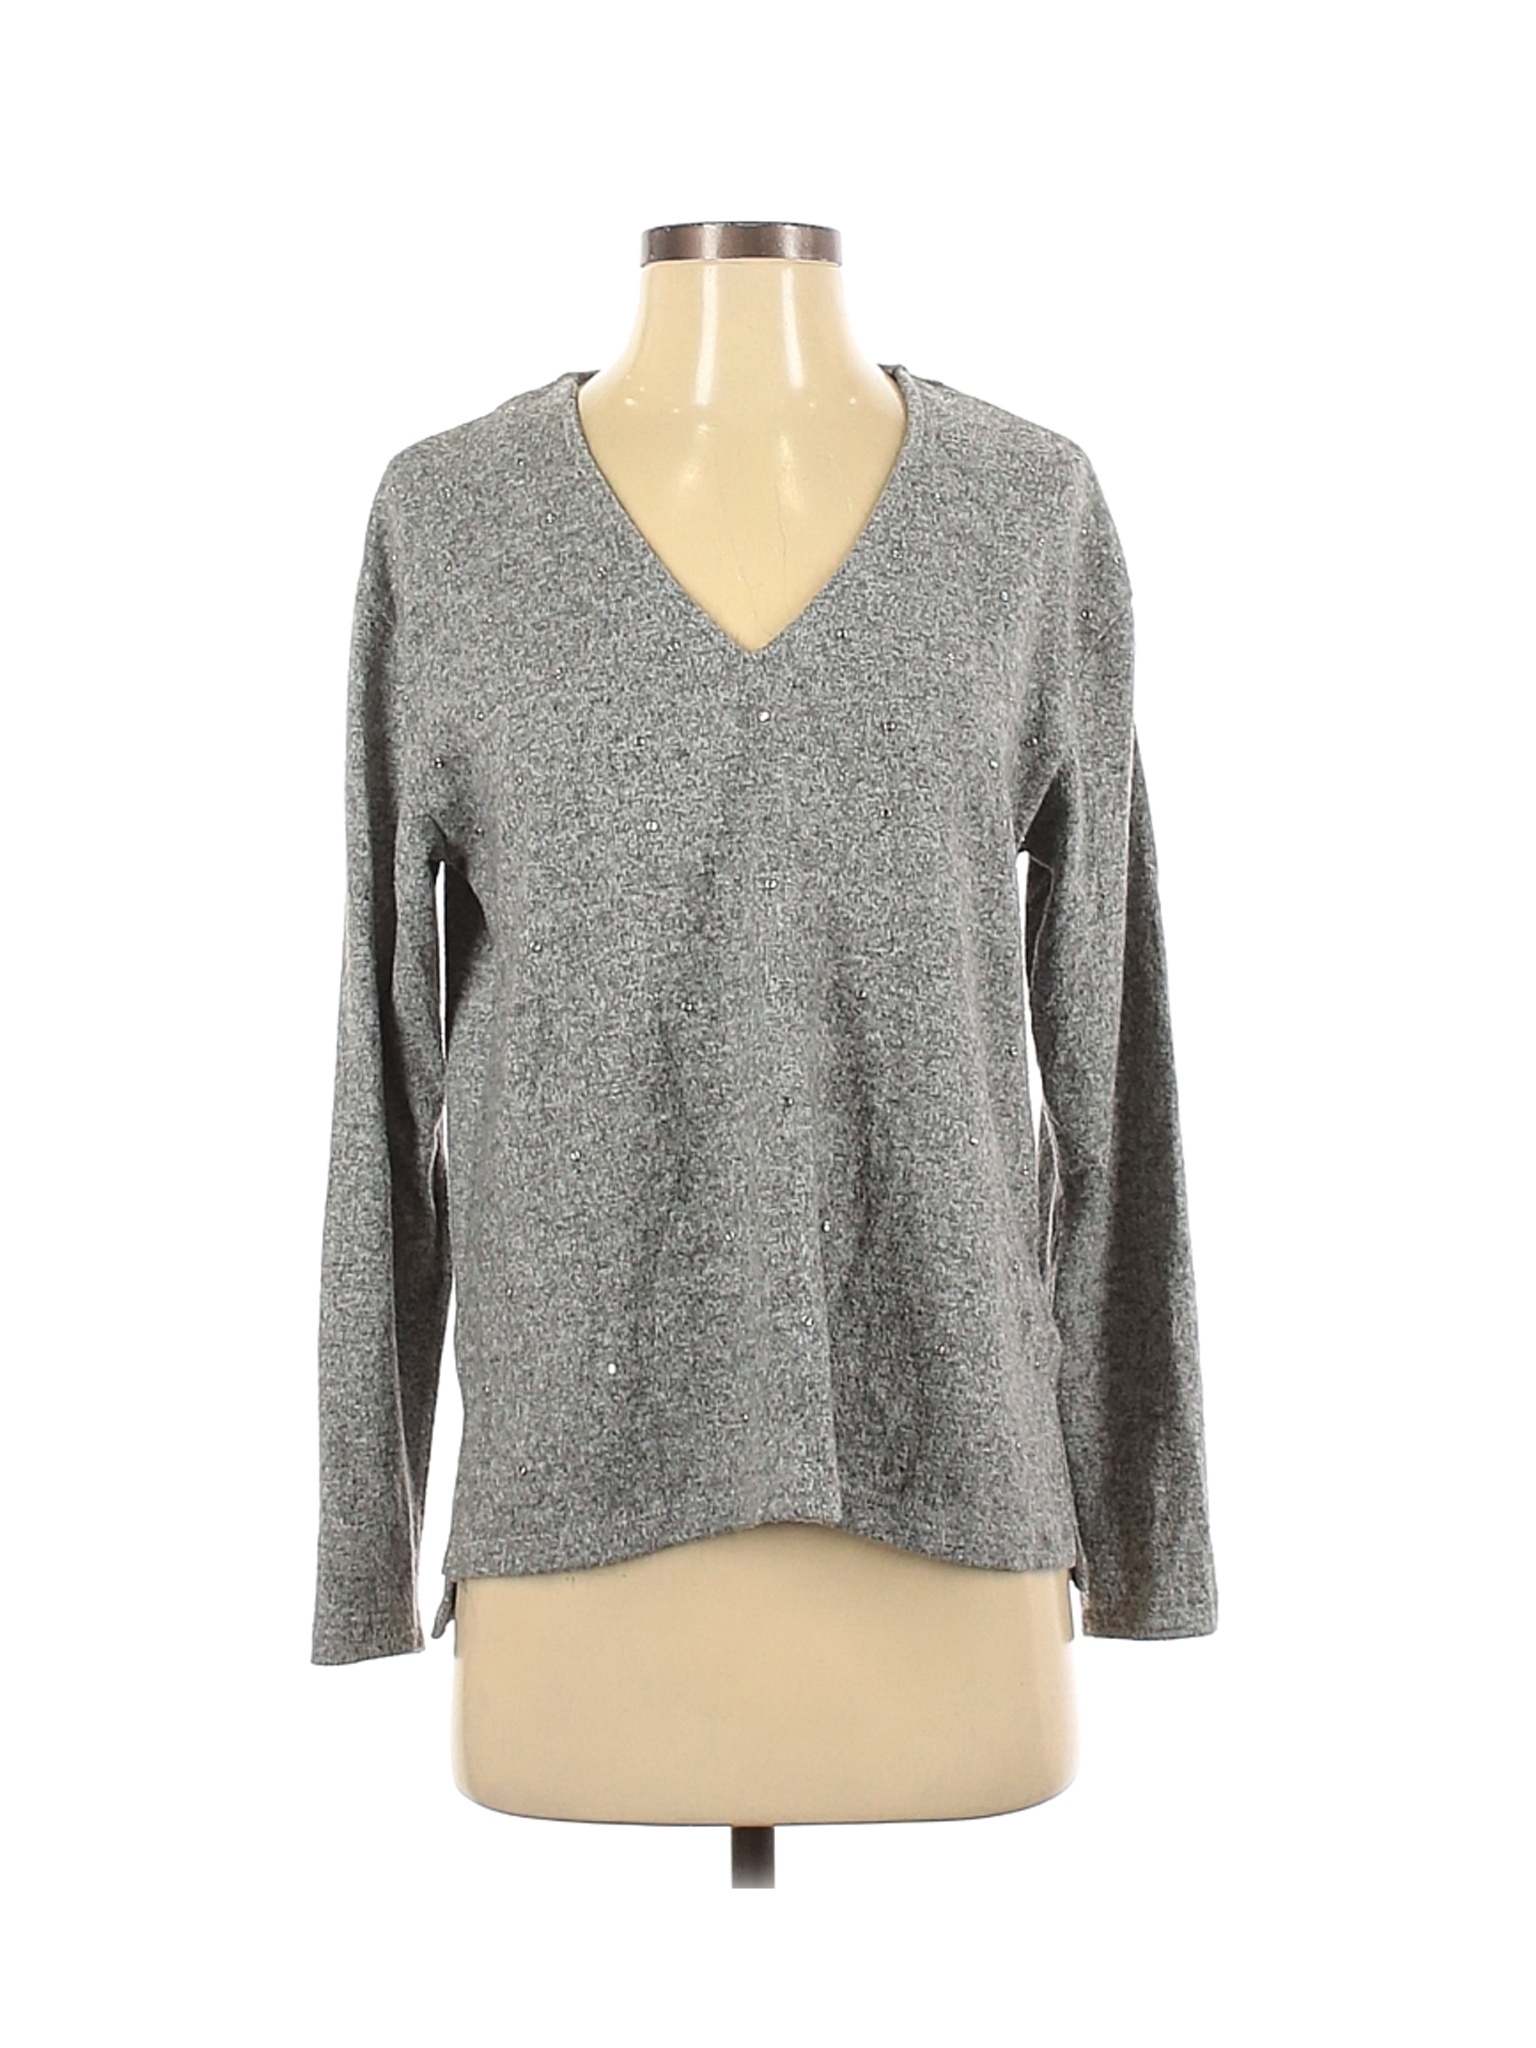 Zara Women Gray Pullover Sweater S | eBay